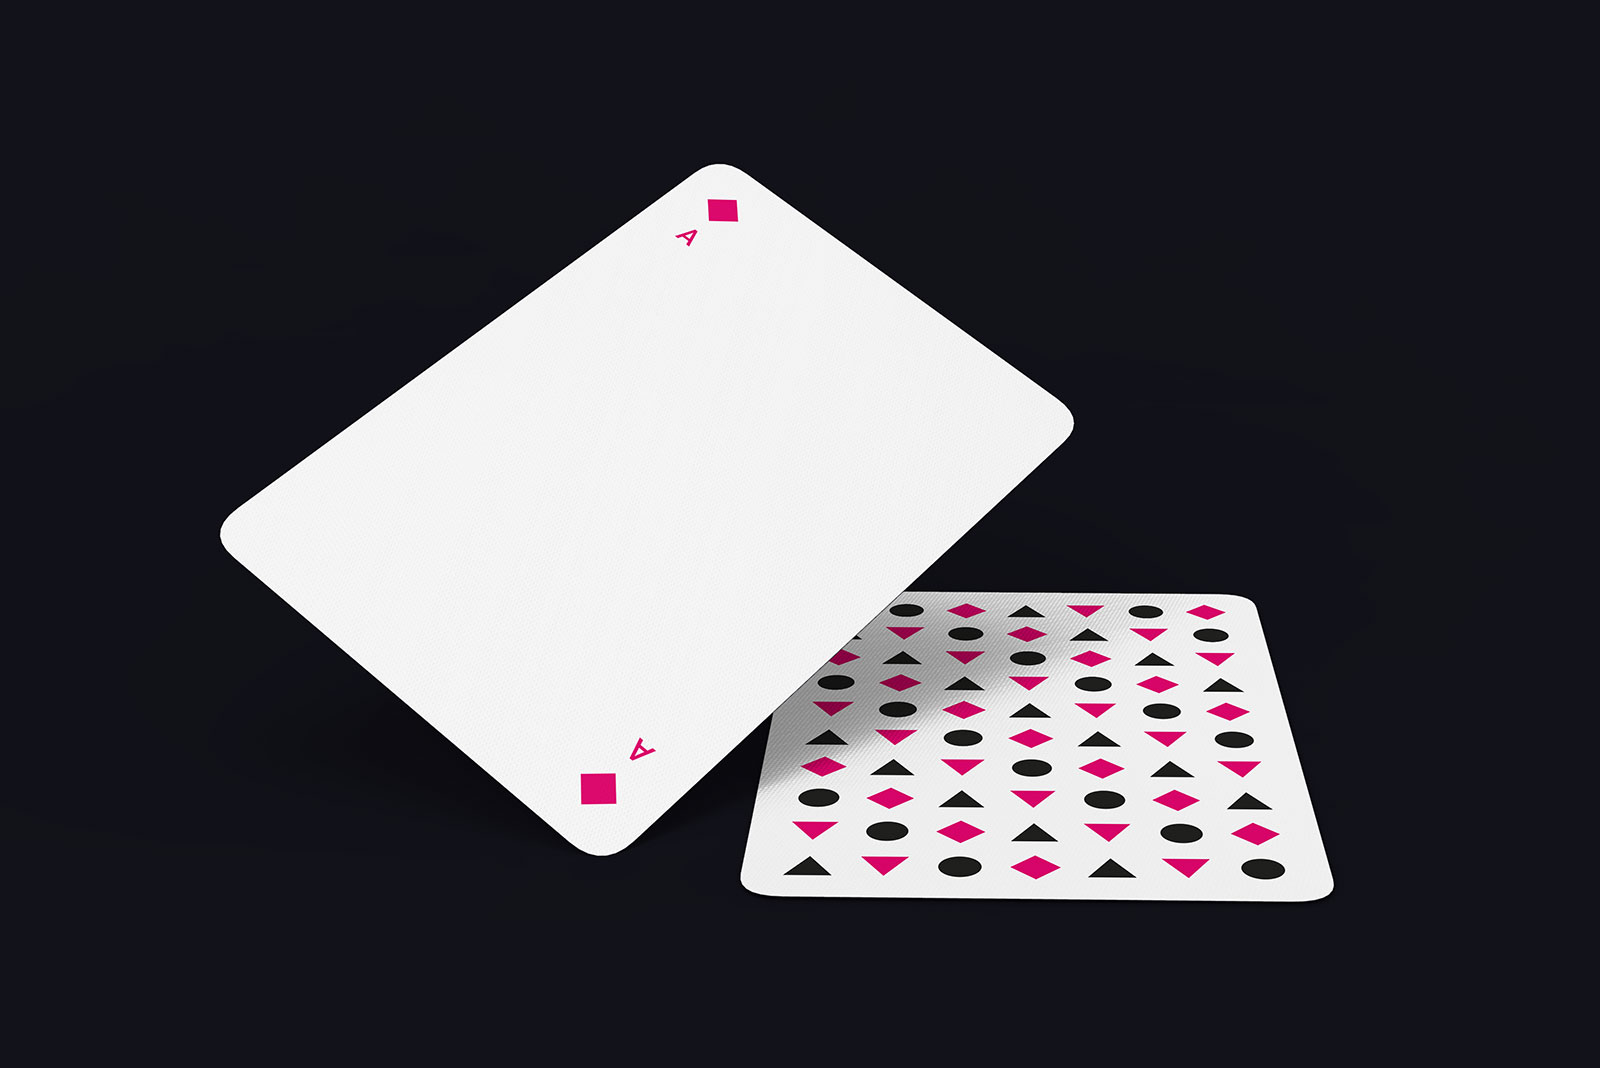 Alexander Glante - Works - Minimalistic Card Game - 08